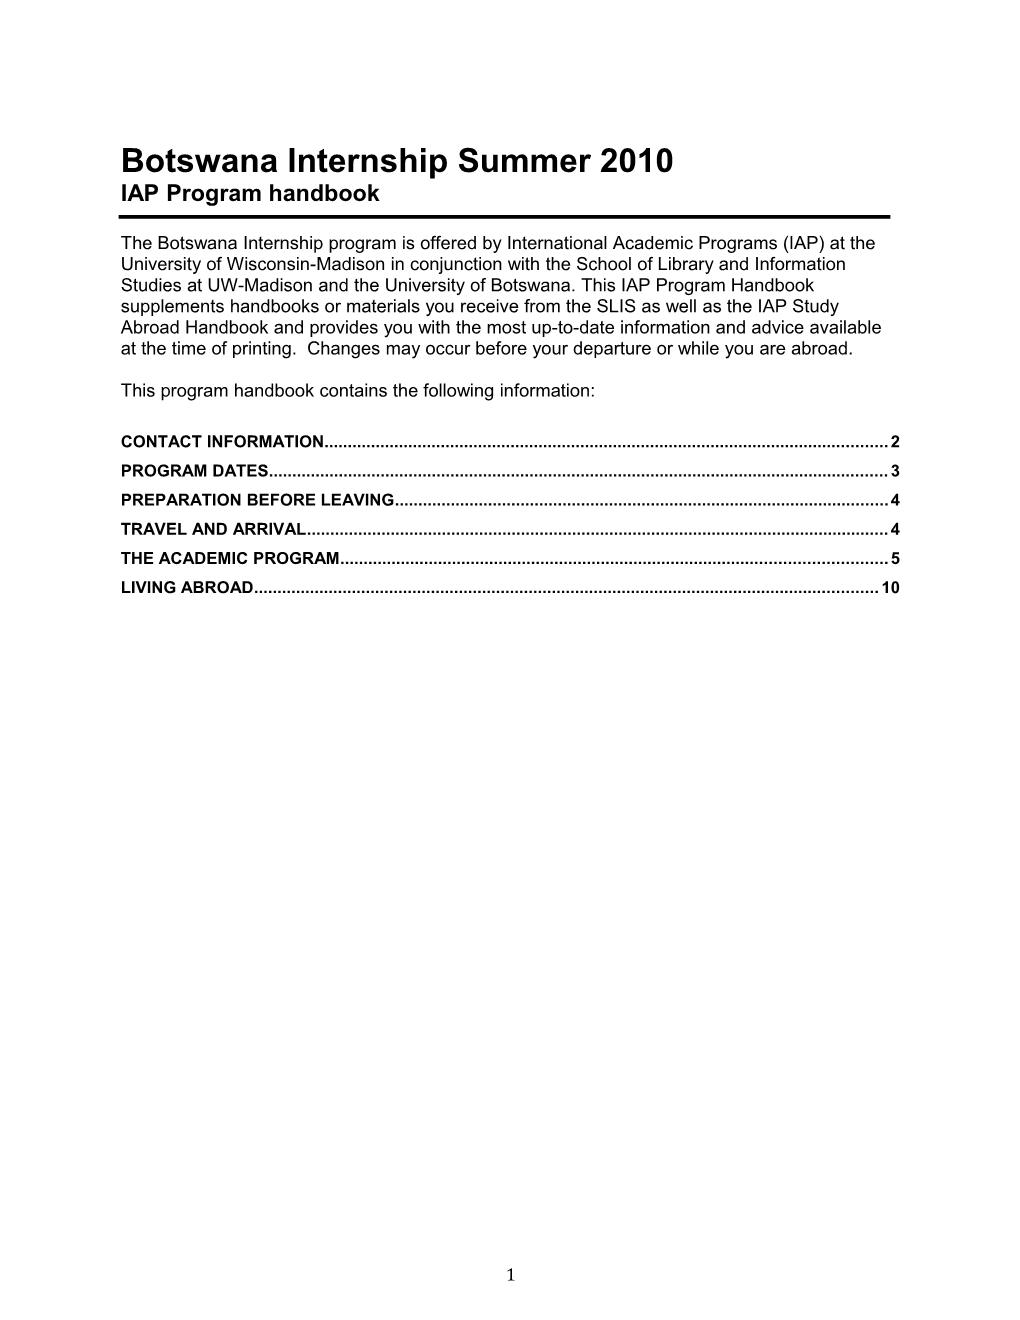 Botswana Internship Summer 2010IAP Program Handbook